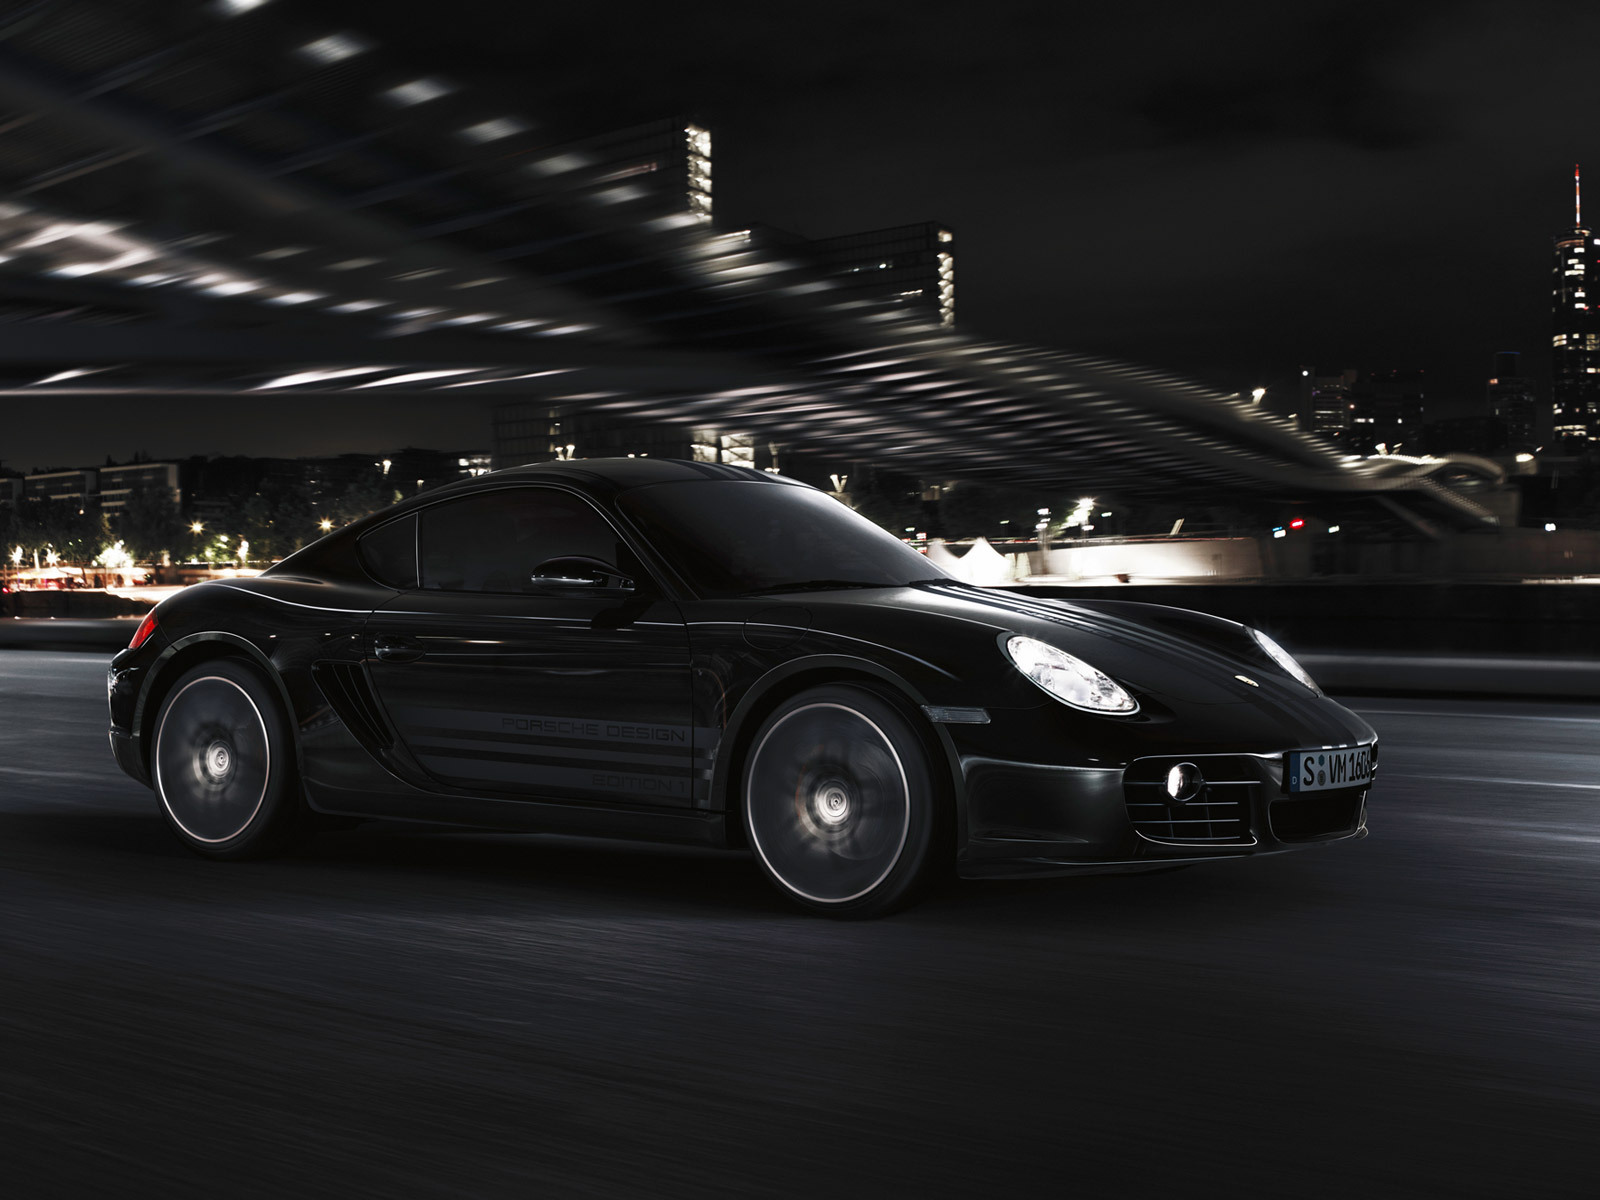 Porsche Cayman S Design Edition 1